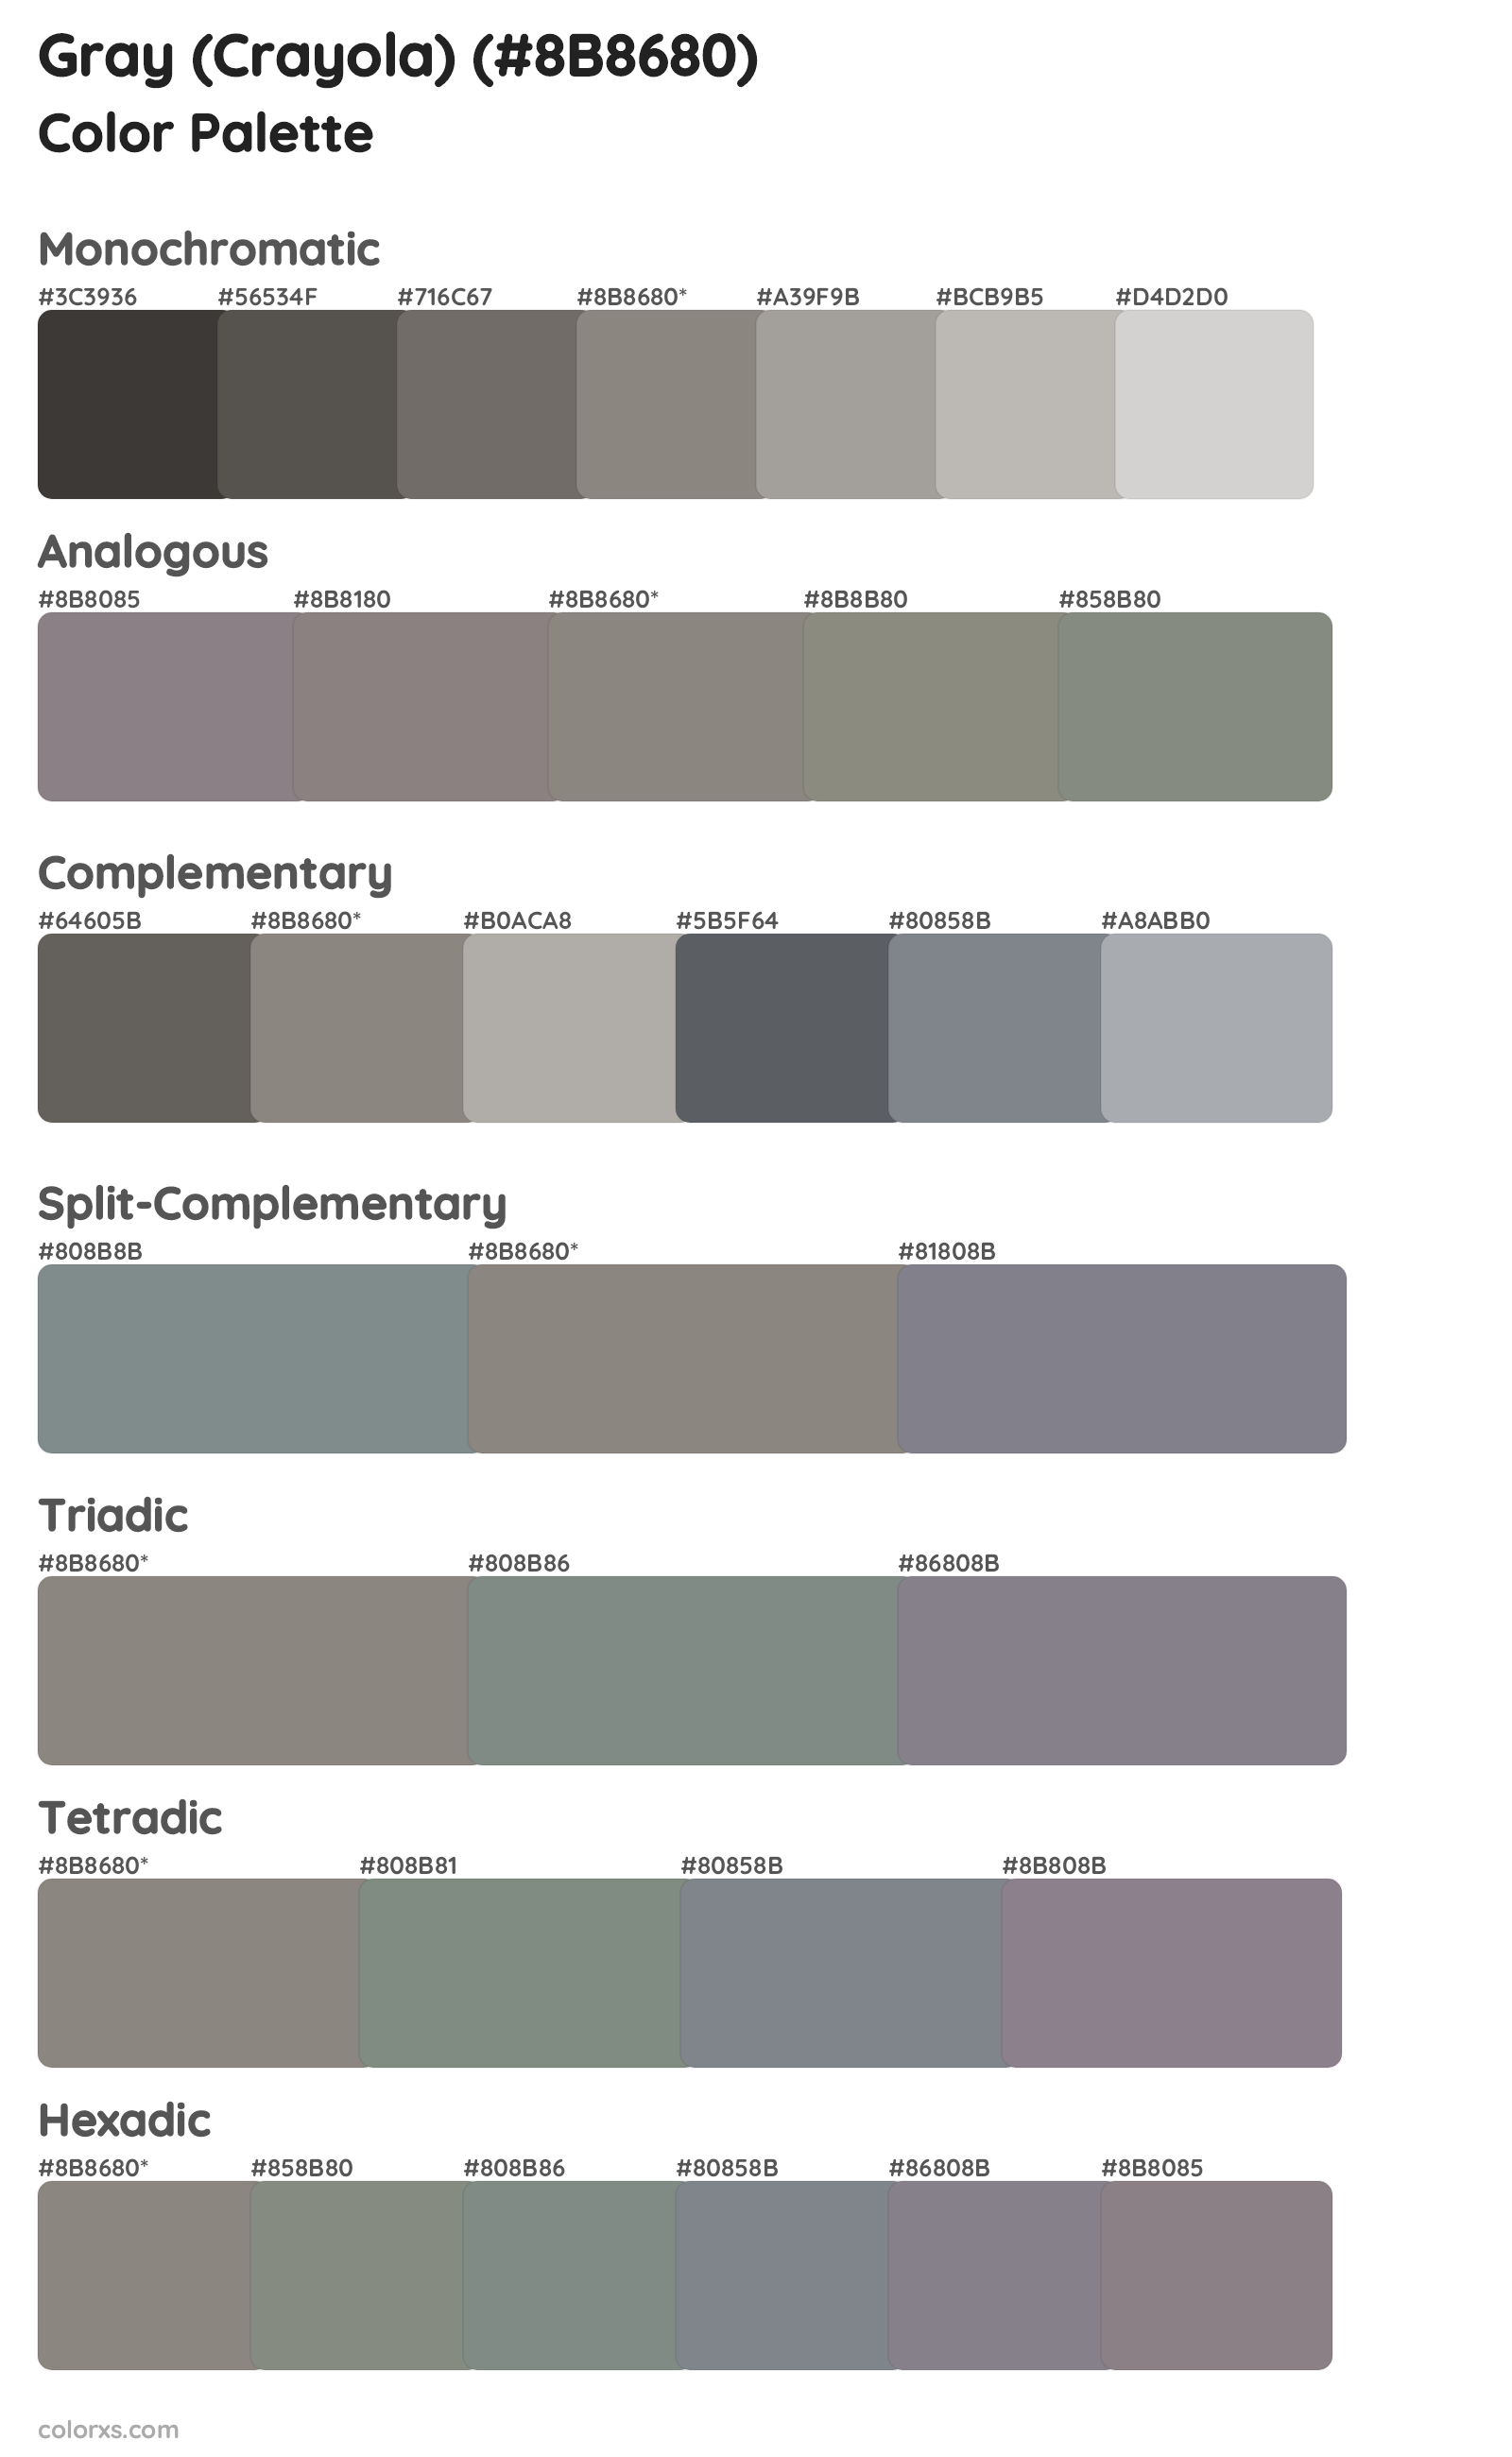 Gray (Crayola) Color Scheme Palettes